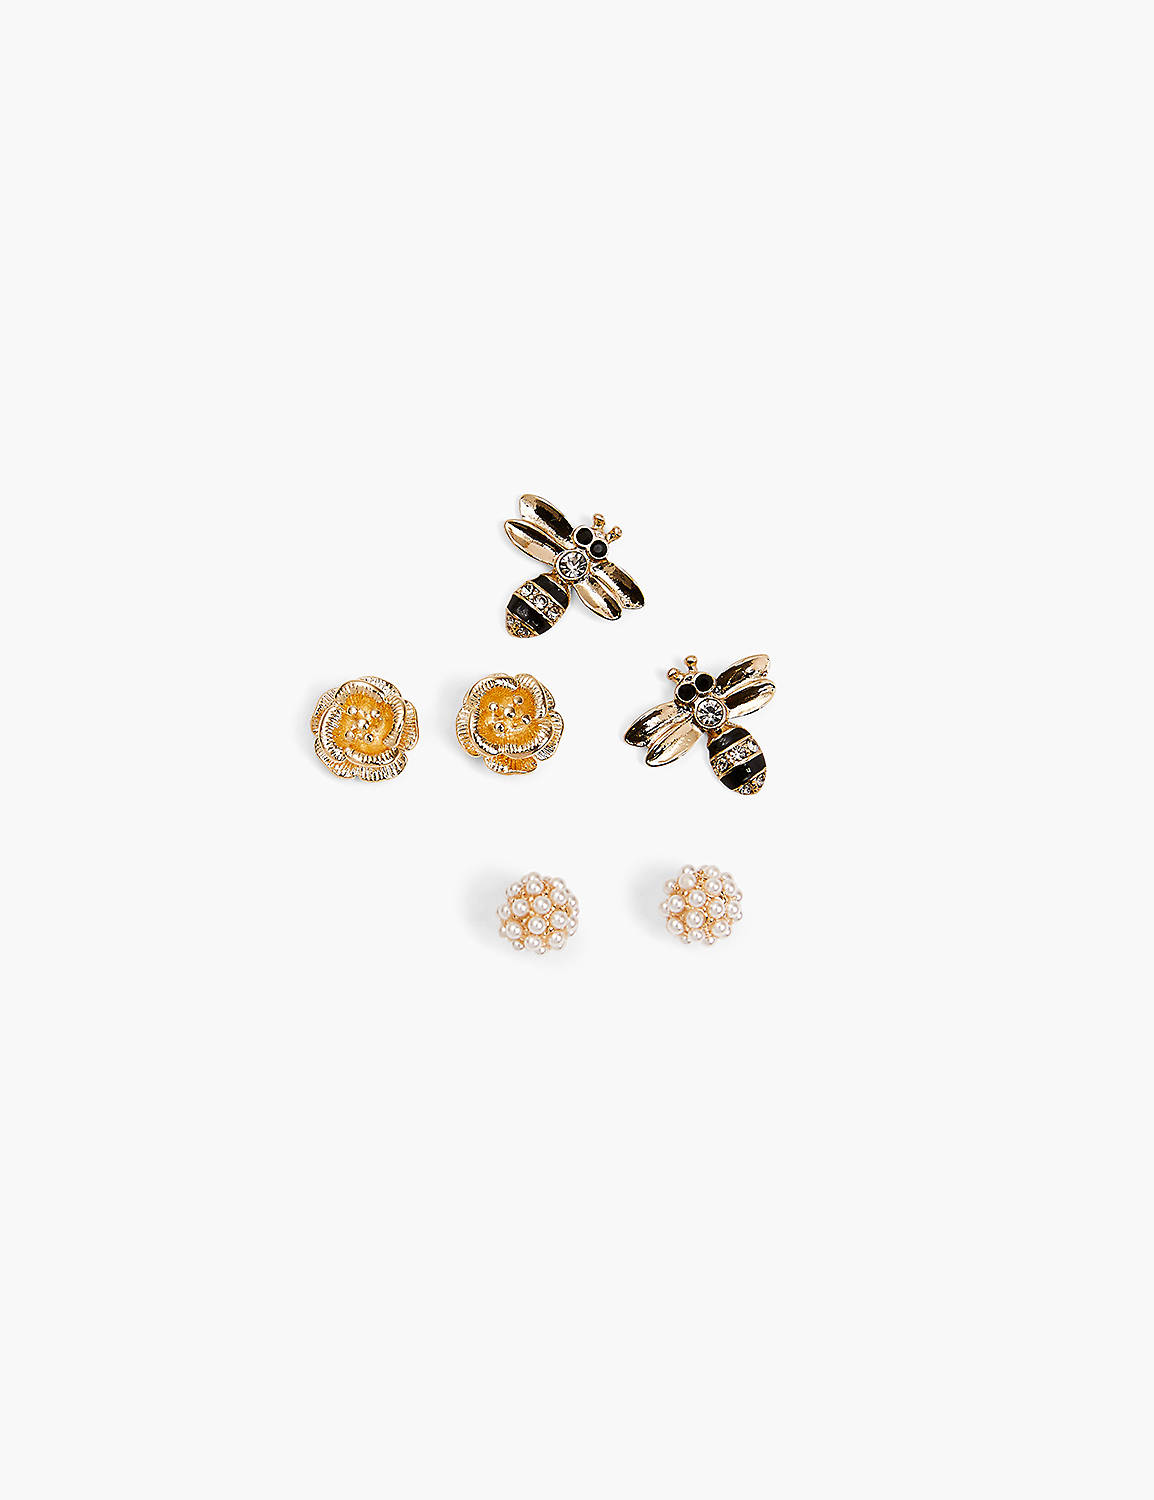 Bee Earrings - 3 Pack Product Image 1